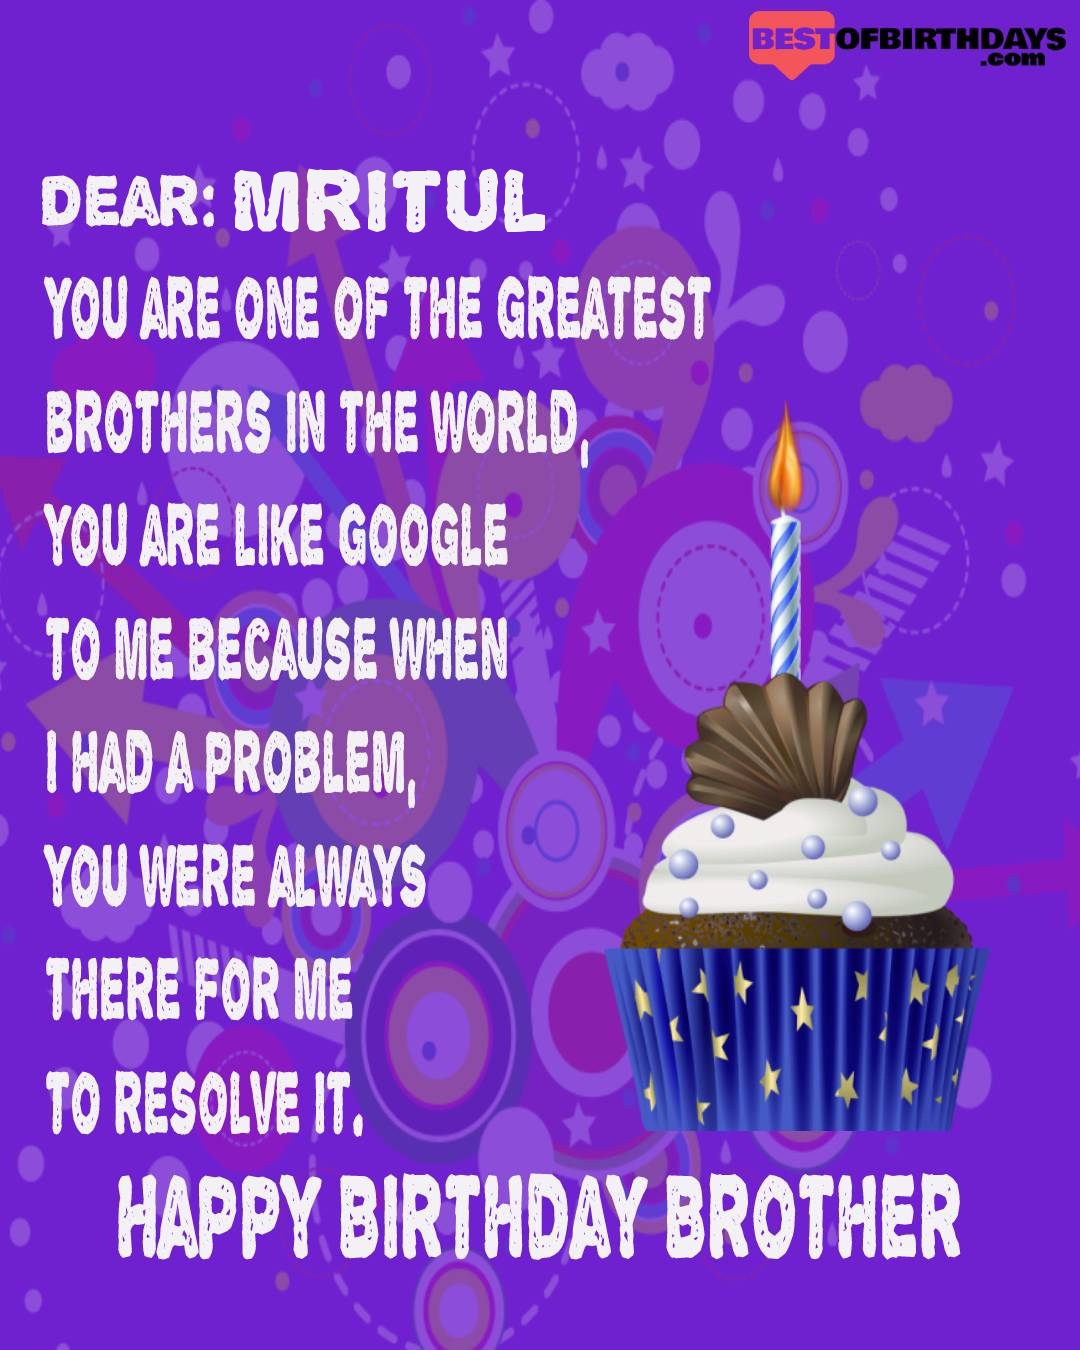 Happy birthday mritul bhai brother bro